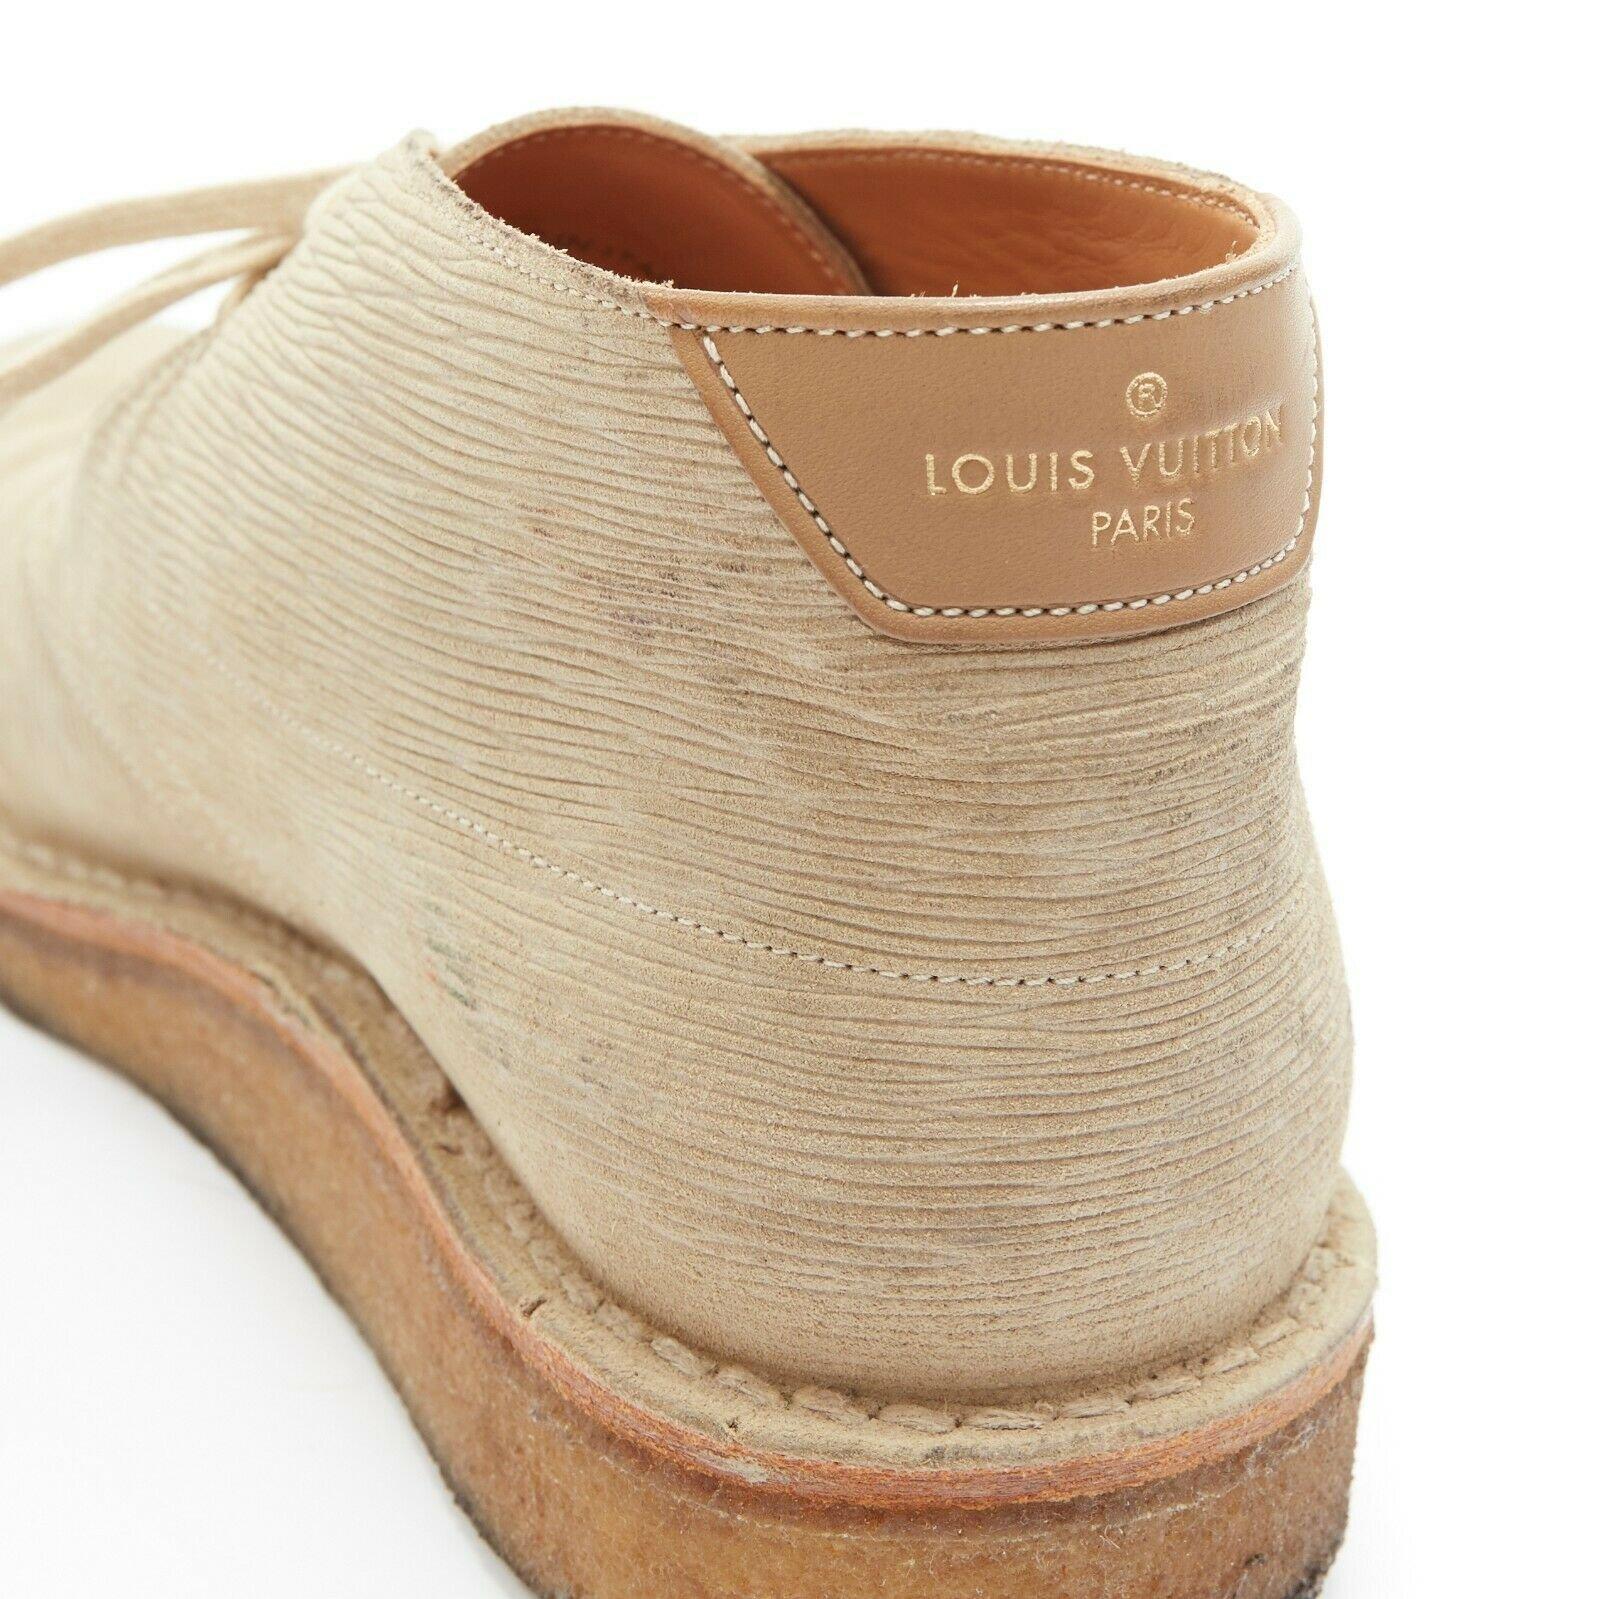 Men's LOUIS VUITTON taupe sand epi suede crepe sole ankle desert boot UK5 EU39 For Sale